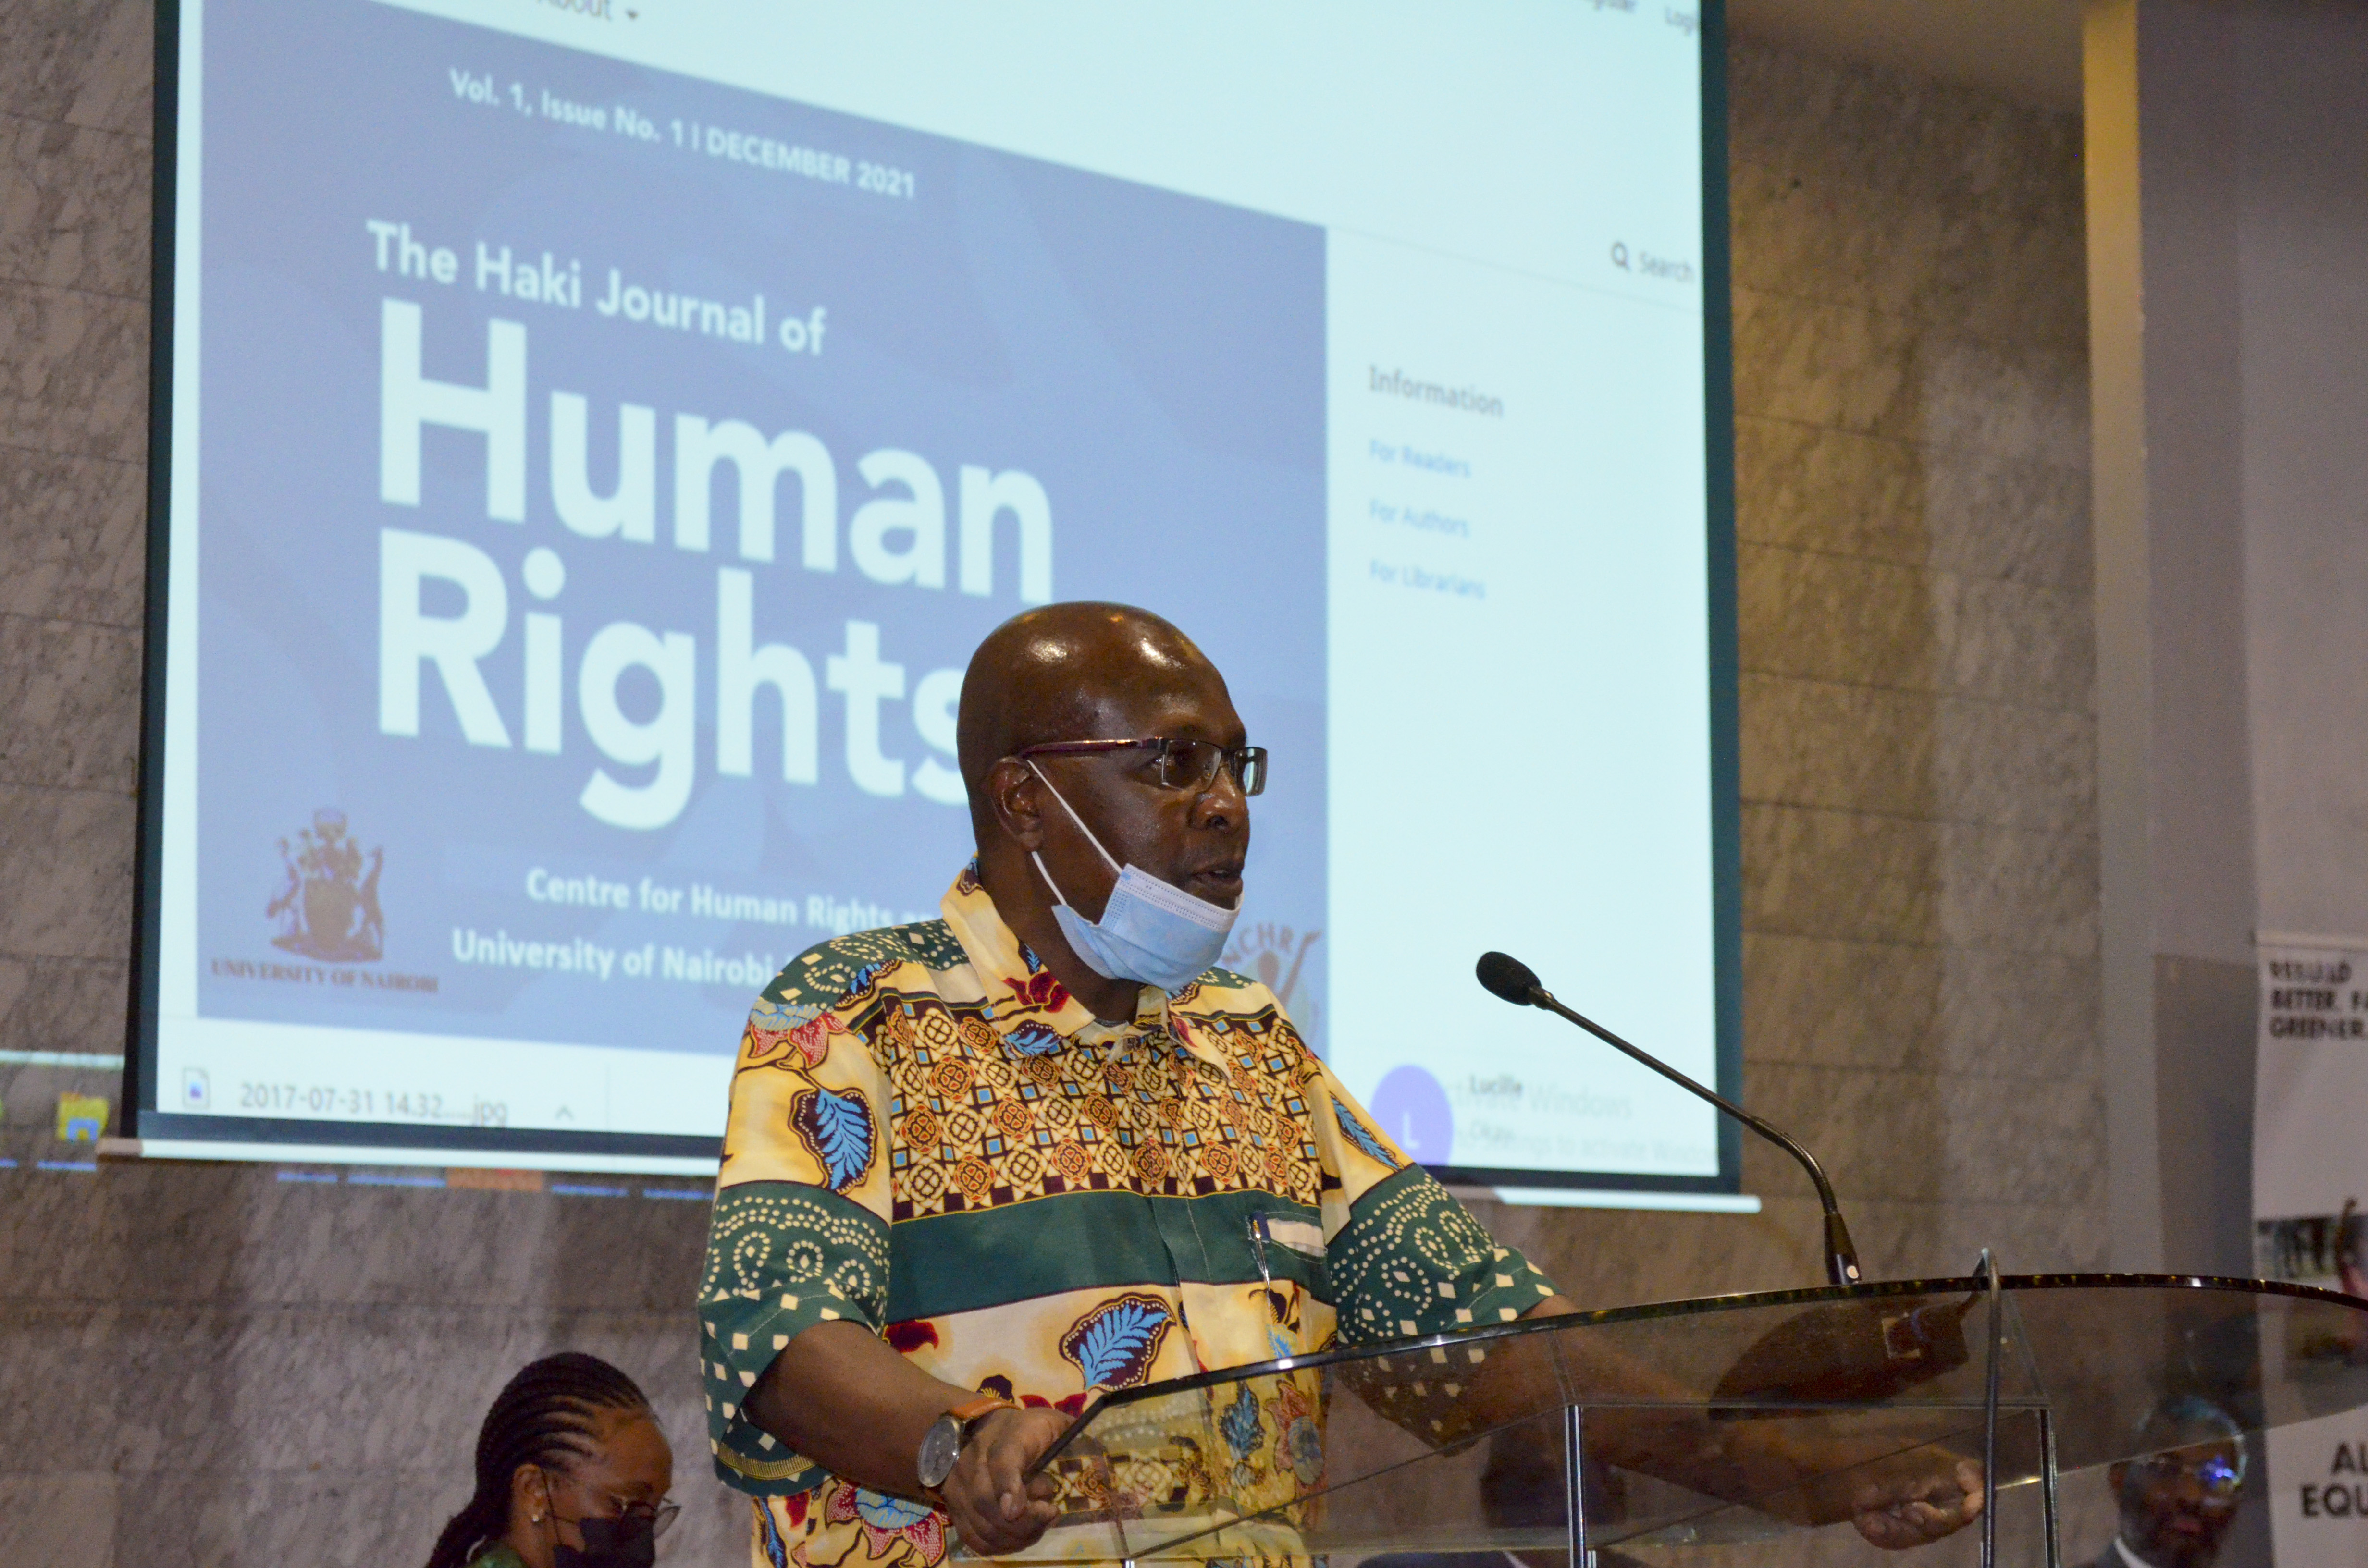 Dr Francis Owakah, Director CHRP, University of Nairobi & Editor Haki Journal speaking during the launch